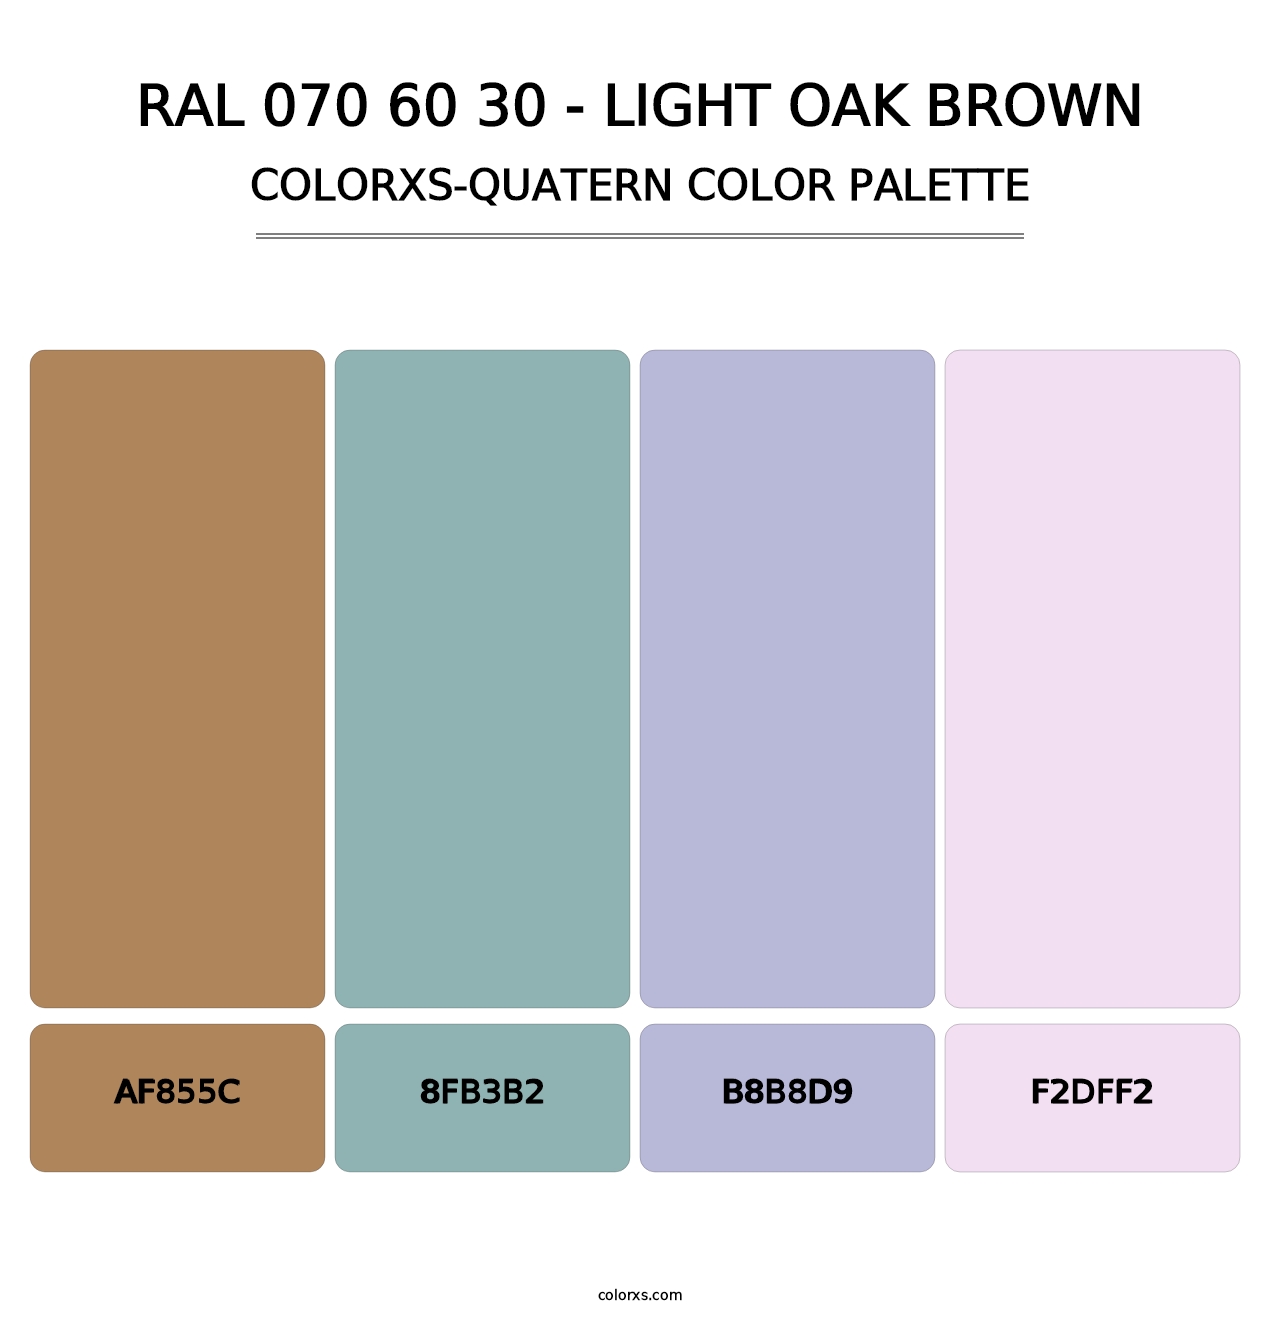 RAL 070 60 30 - Light Oak Brown - Colorxs Quatern Palette